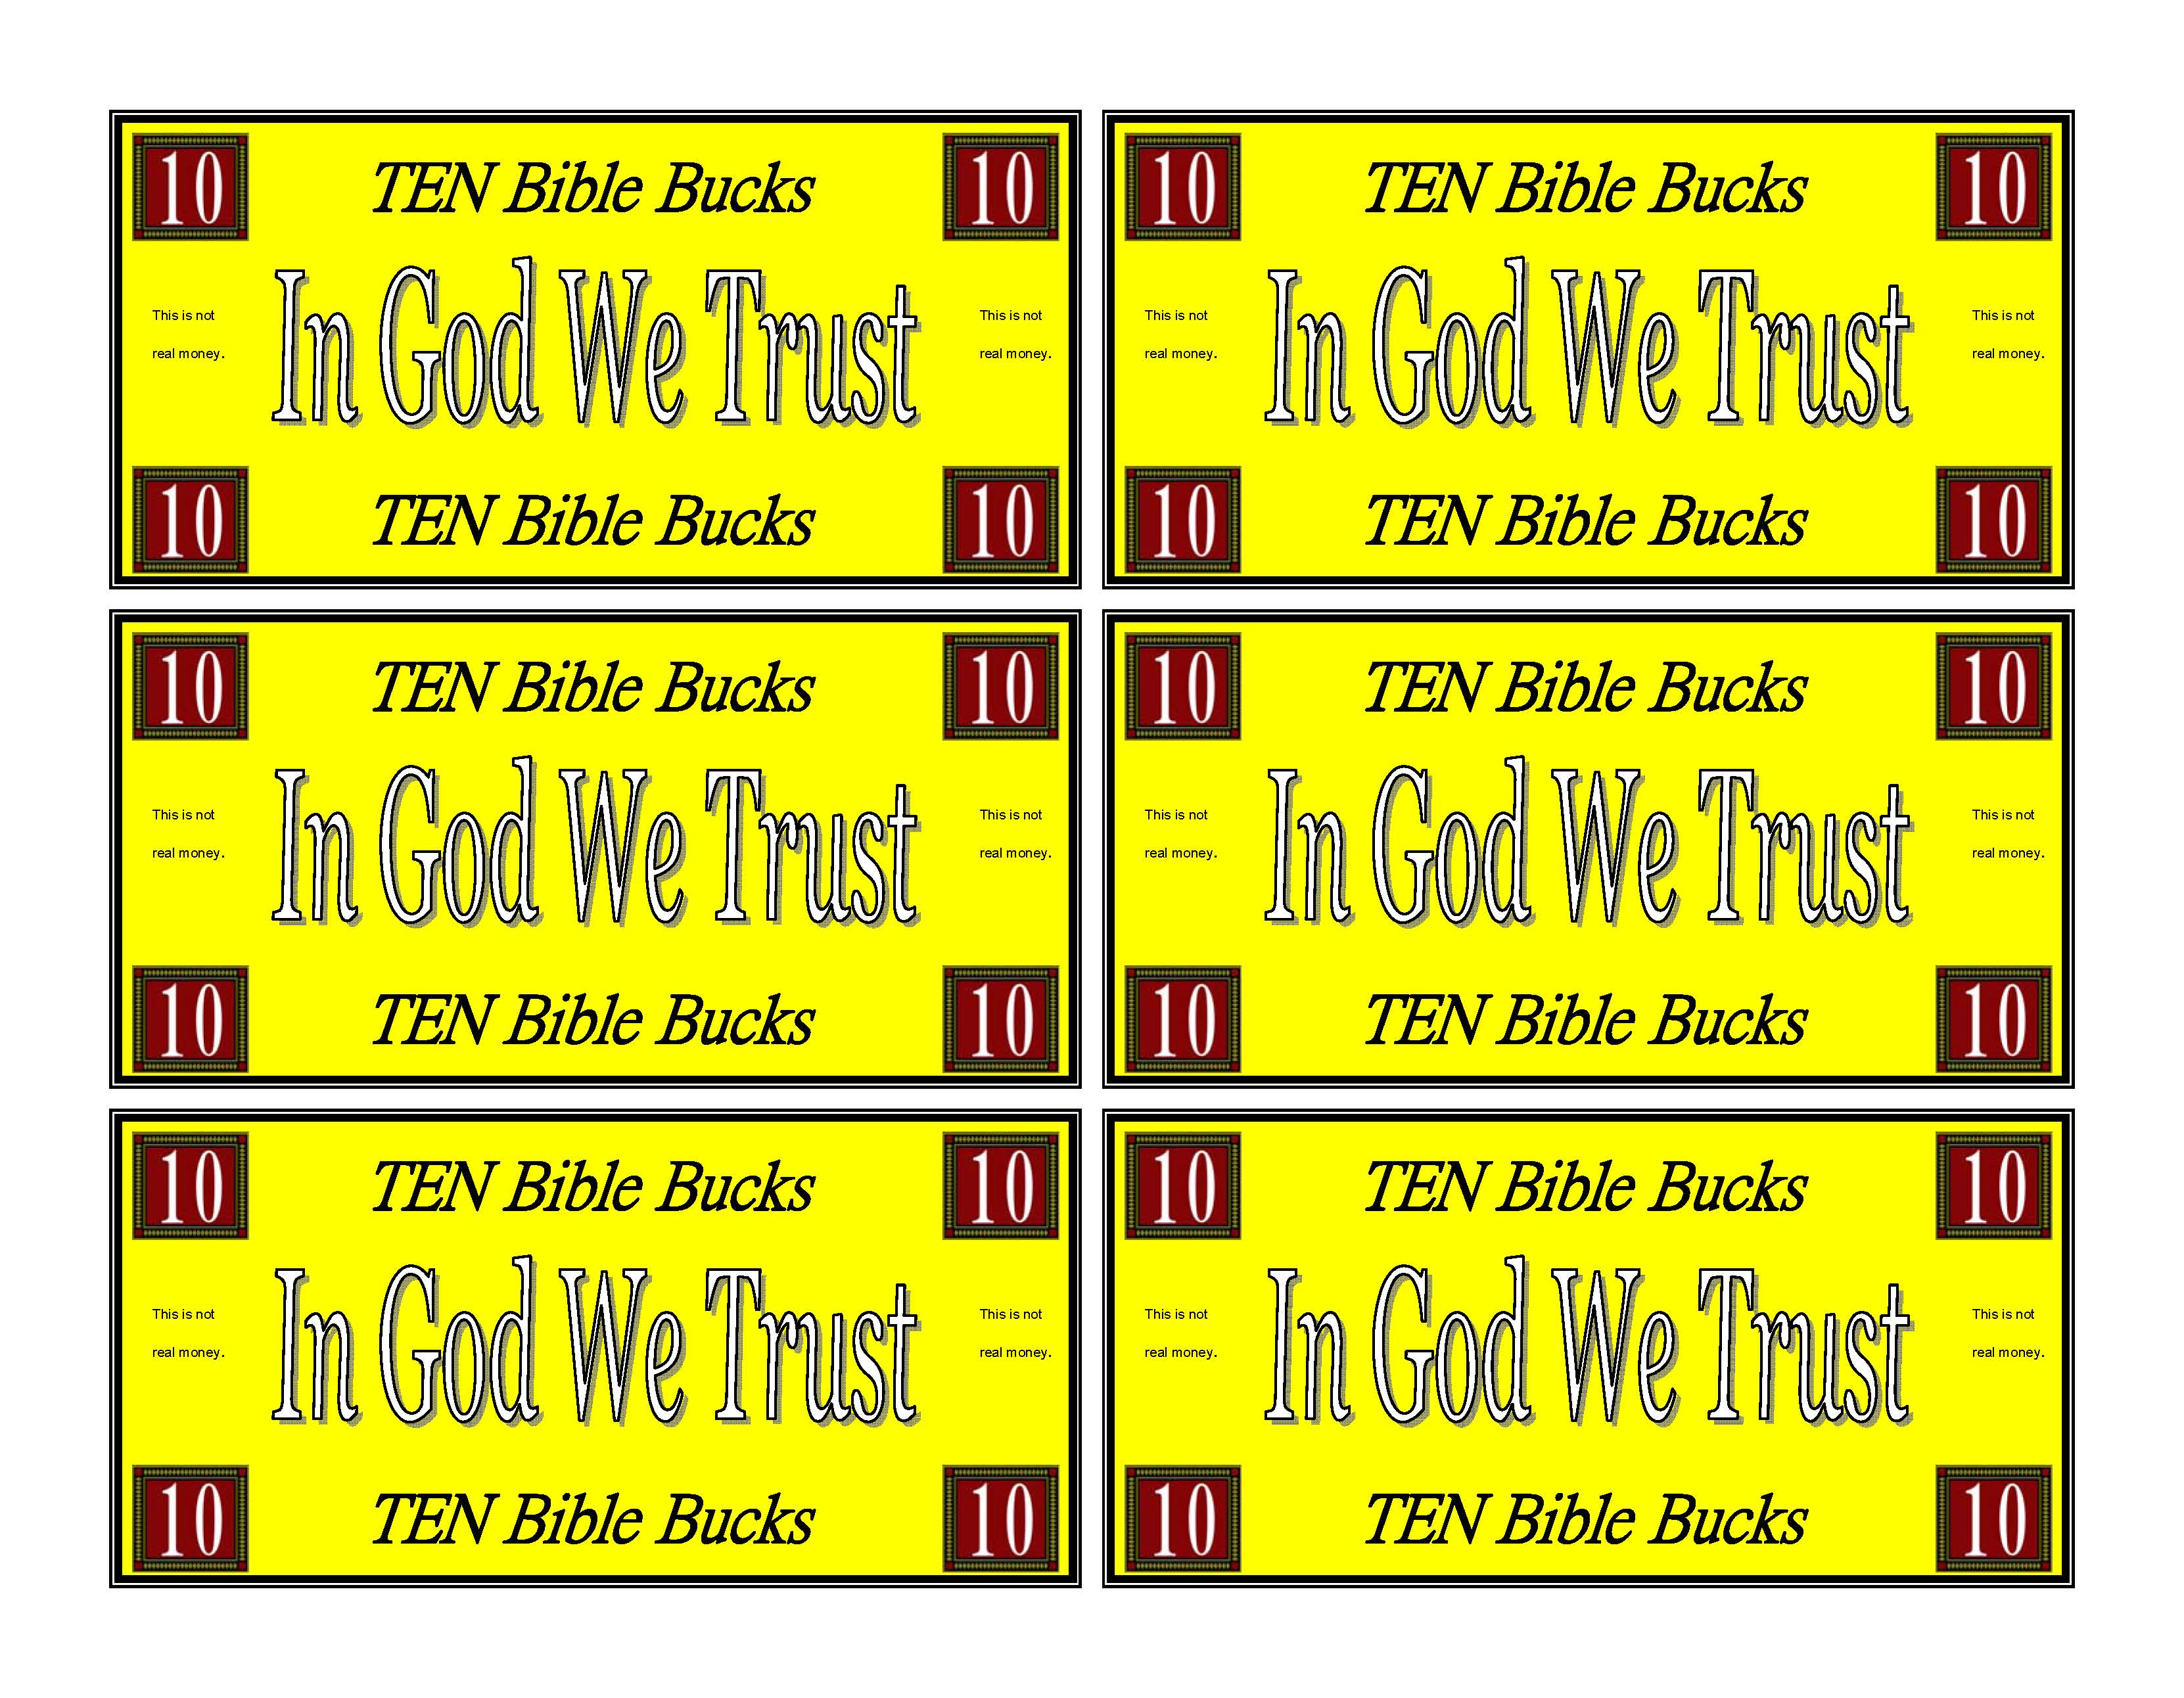 bible-bucks-for-sunday-school-kids-ministry-church-play-money-templates